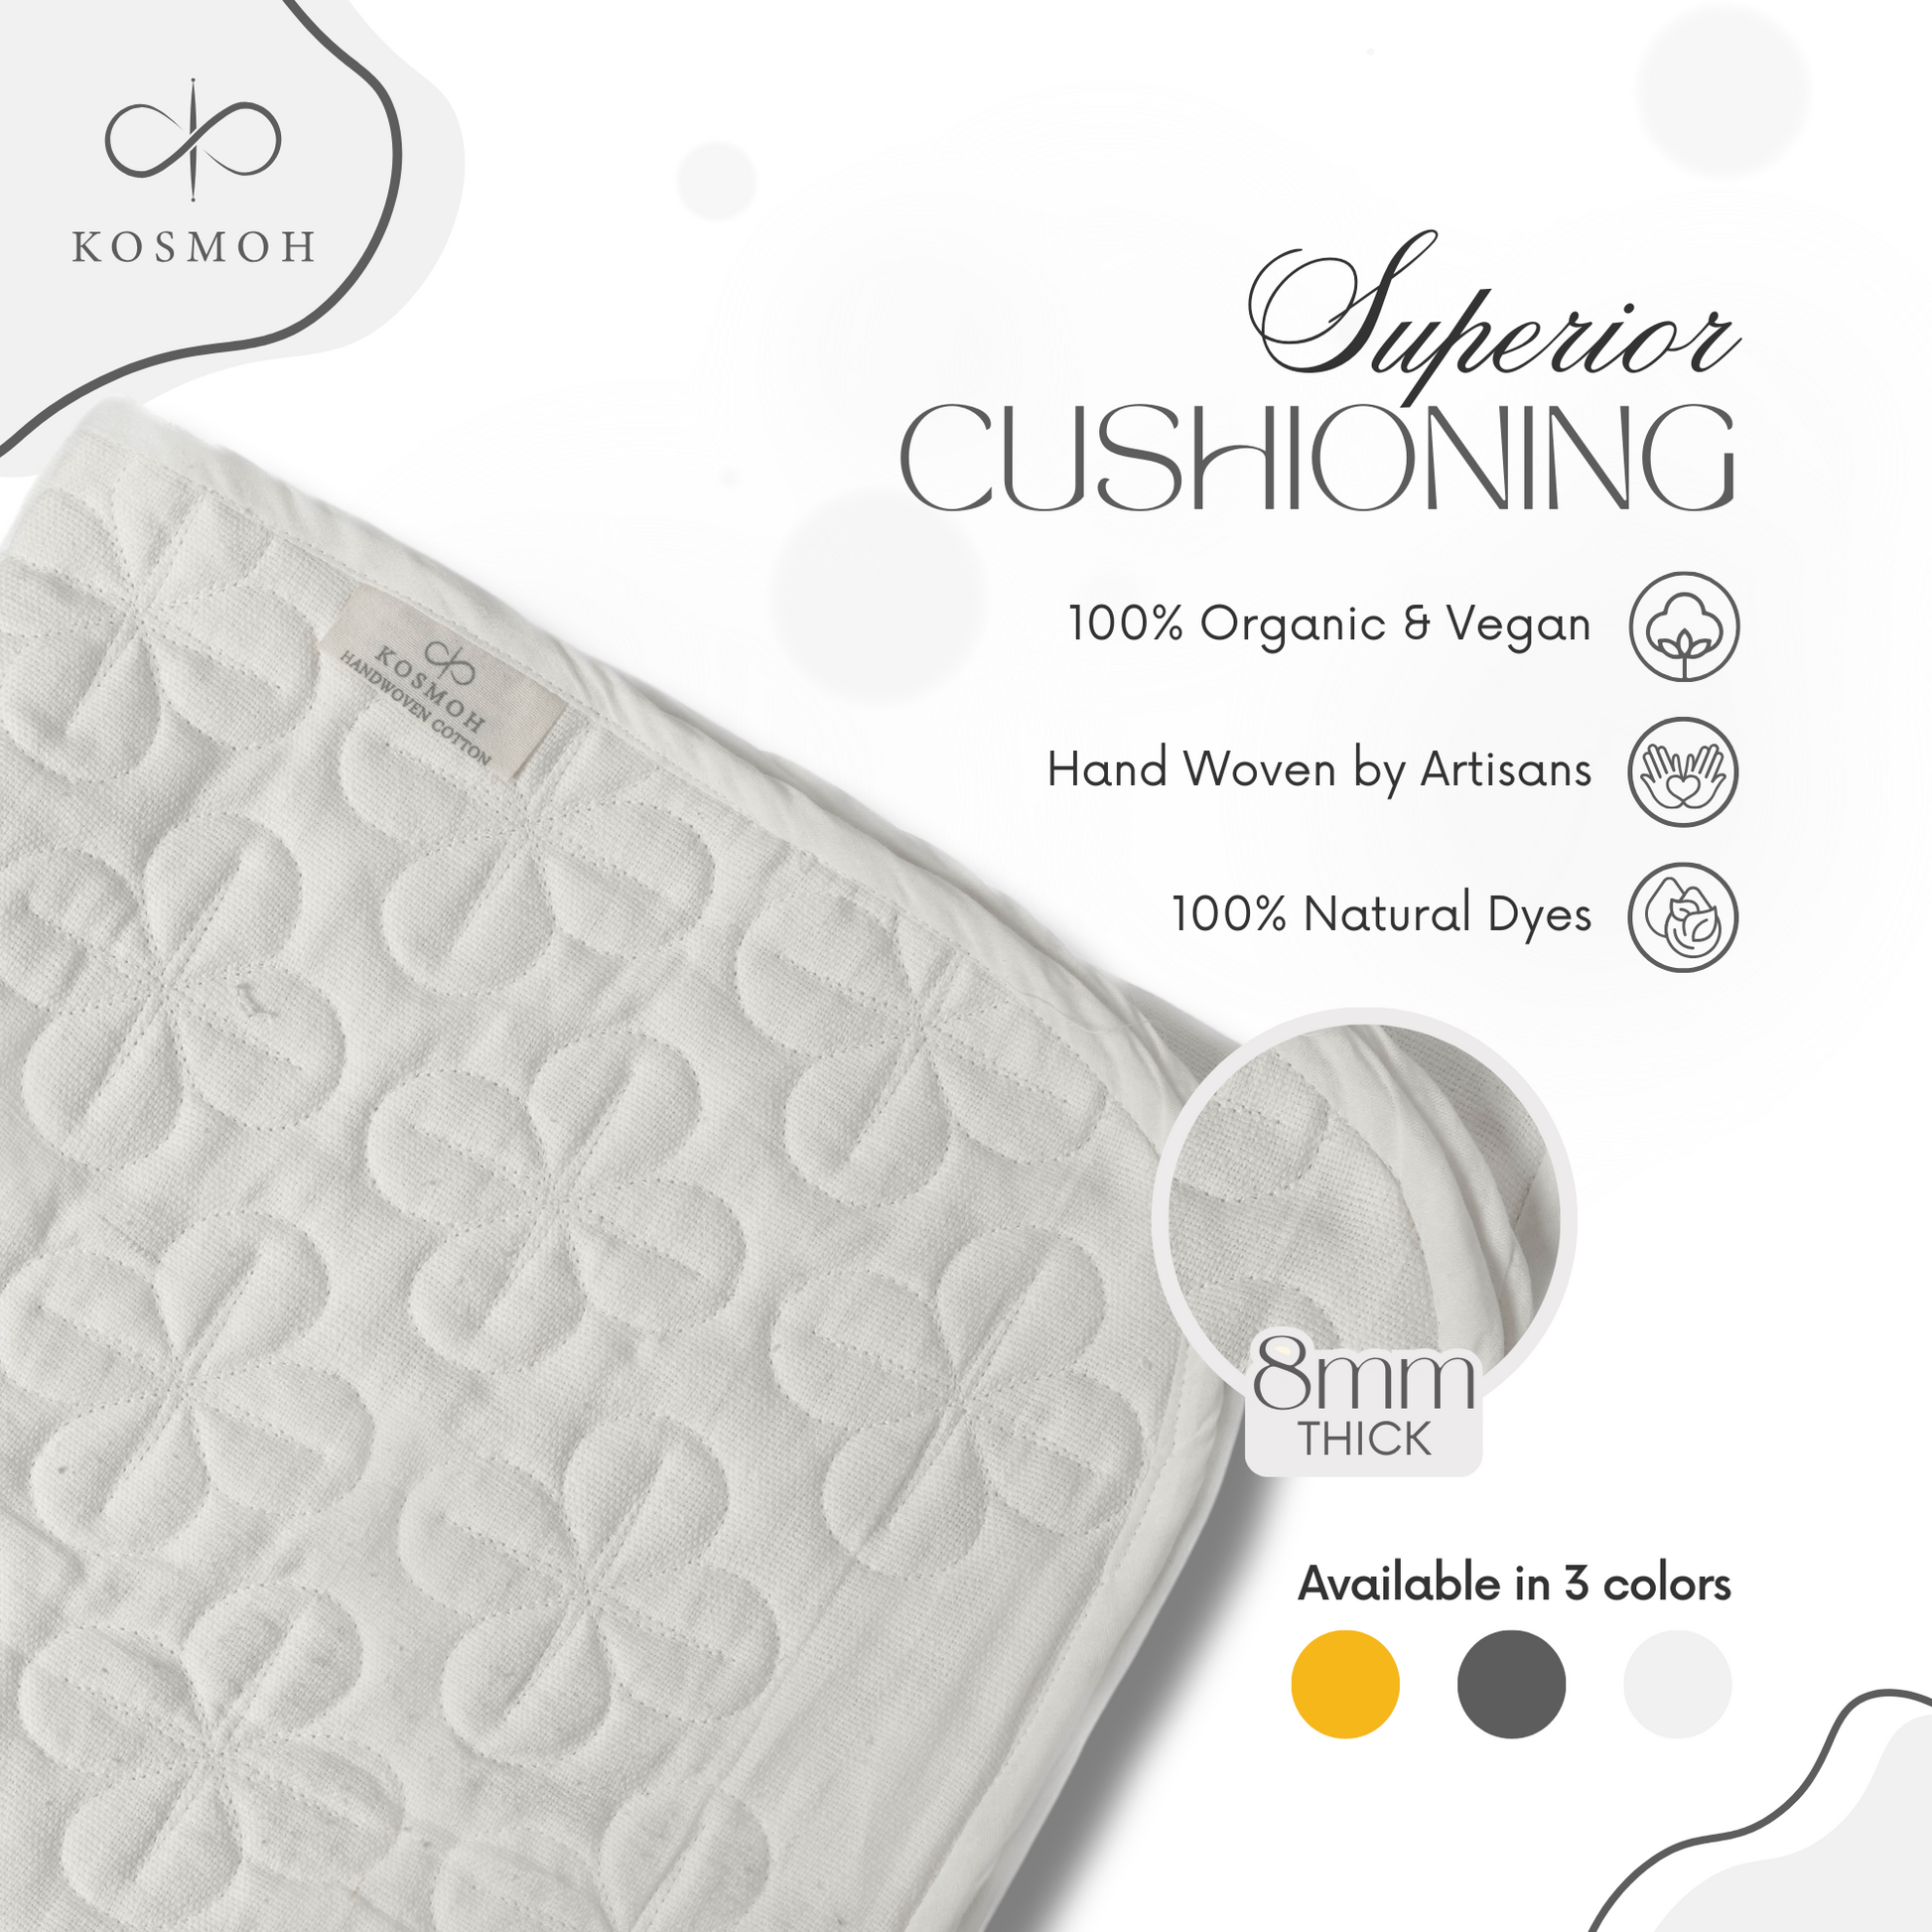 Buy Organic Cotton Yoga Mat, Buy Yoga Mats Online